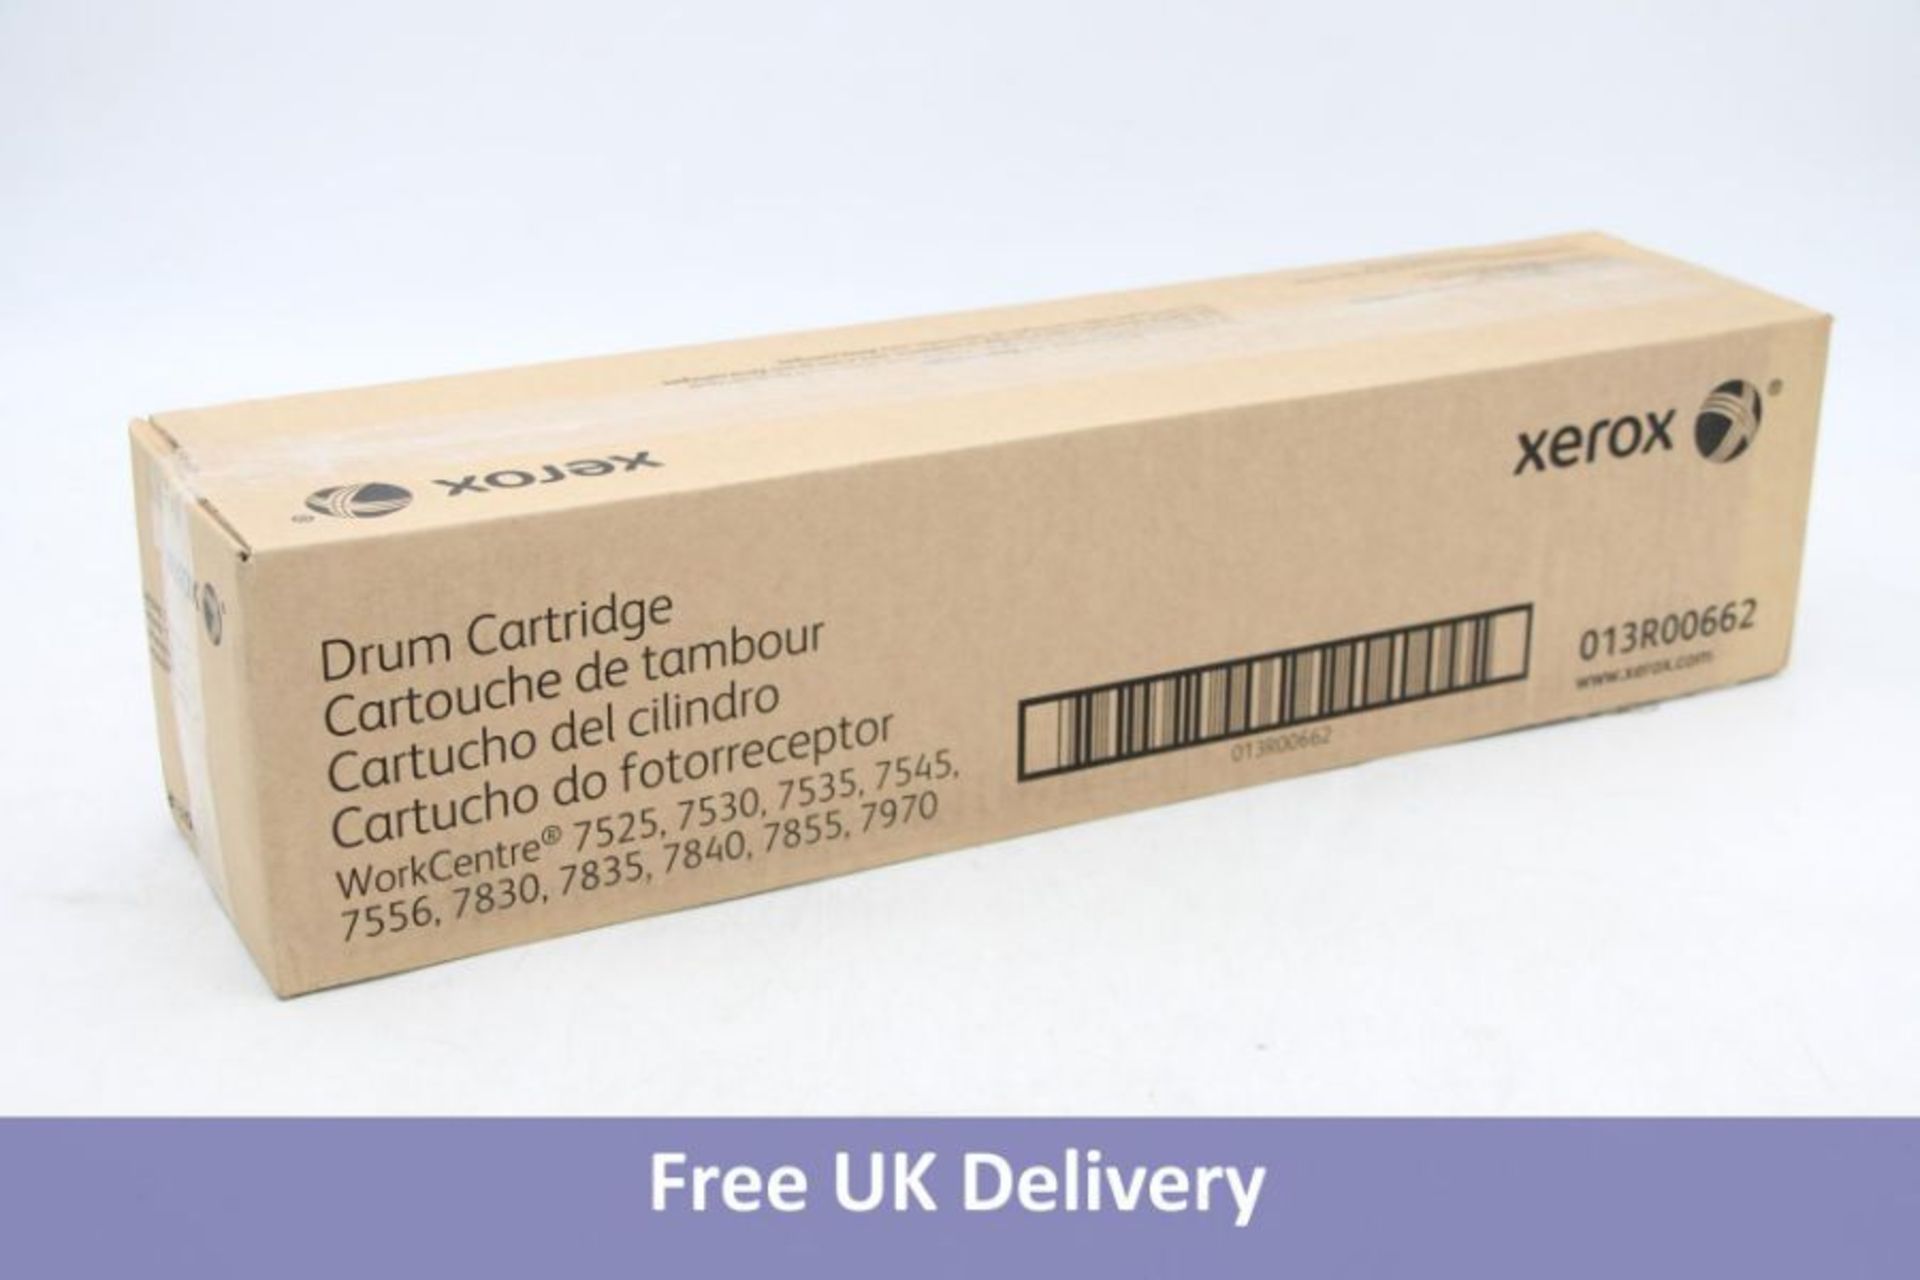 Xerox 013R00662 Drum Cartridge. Box damaged